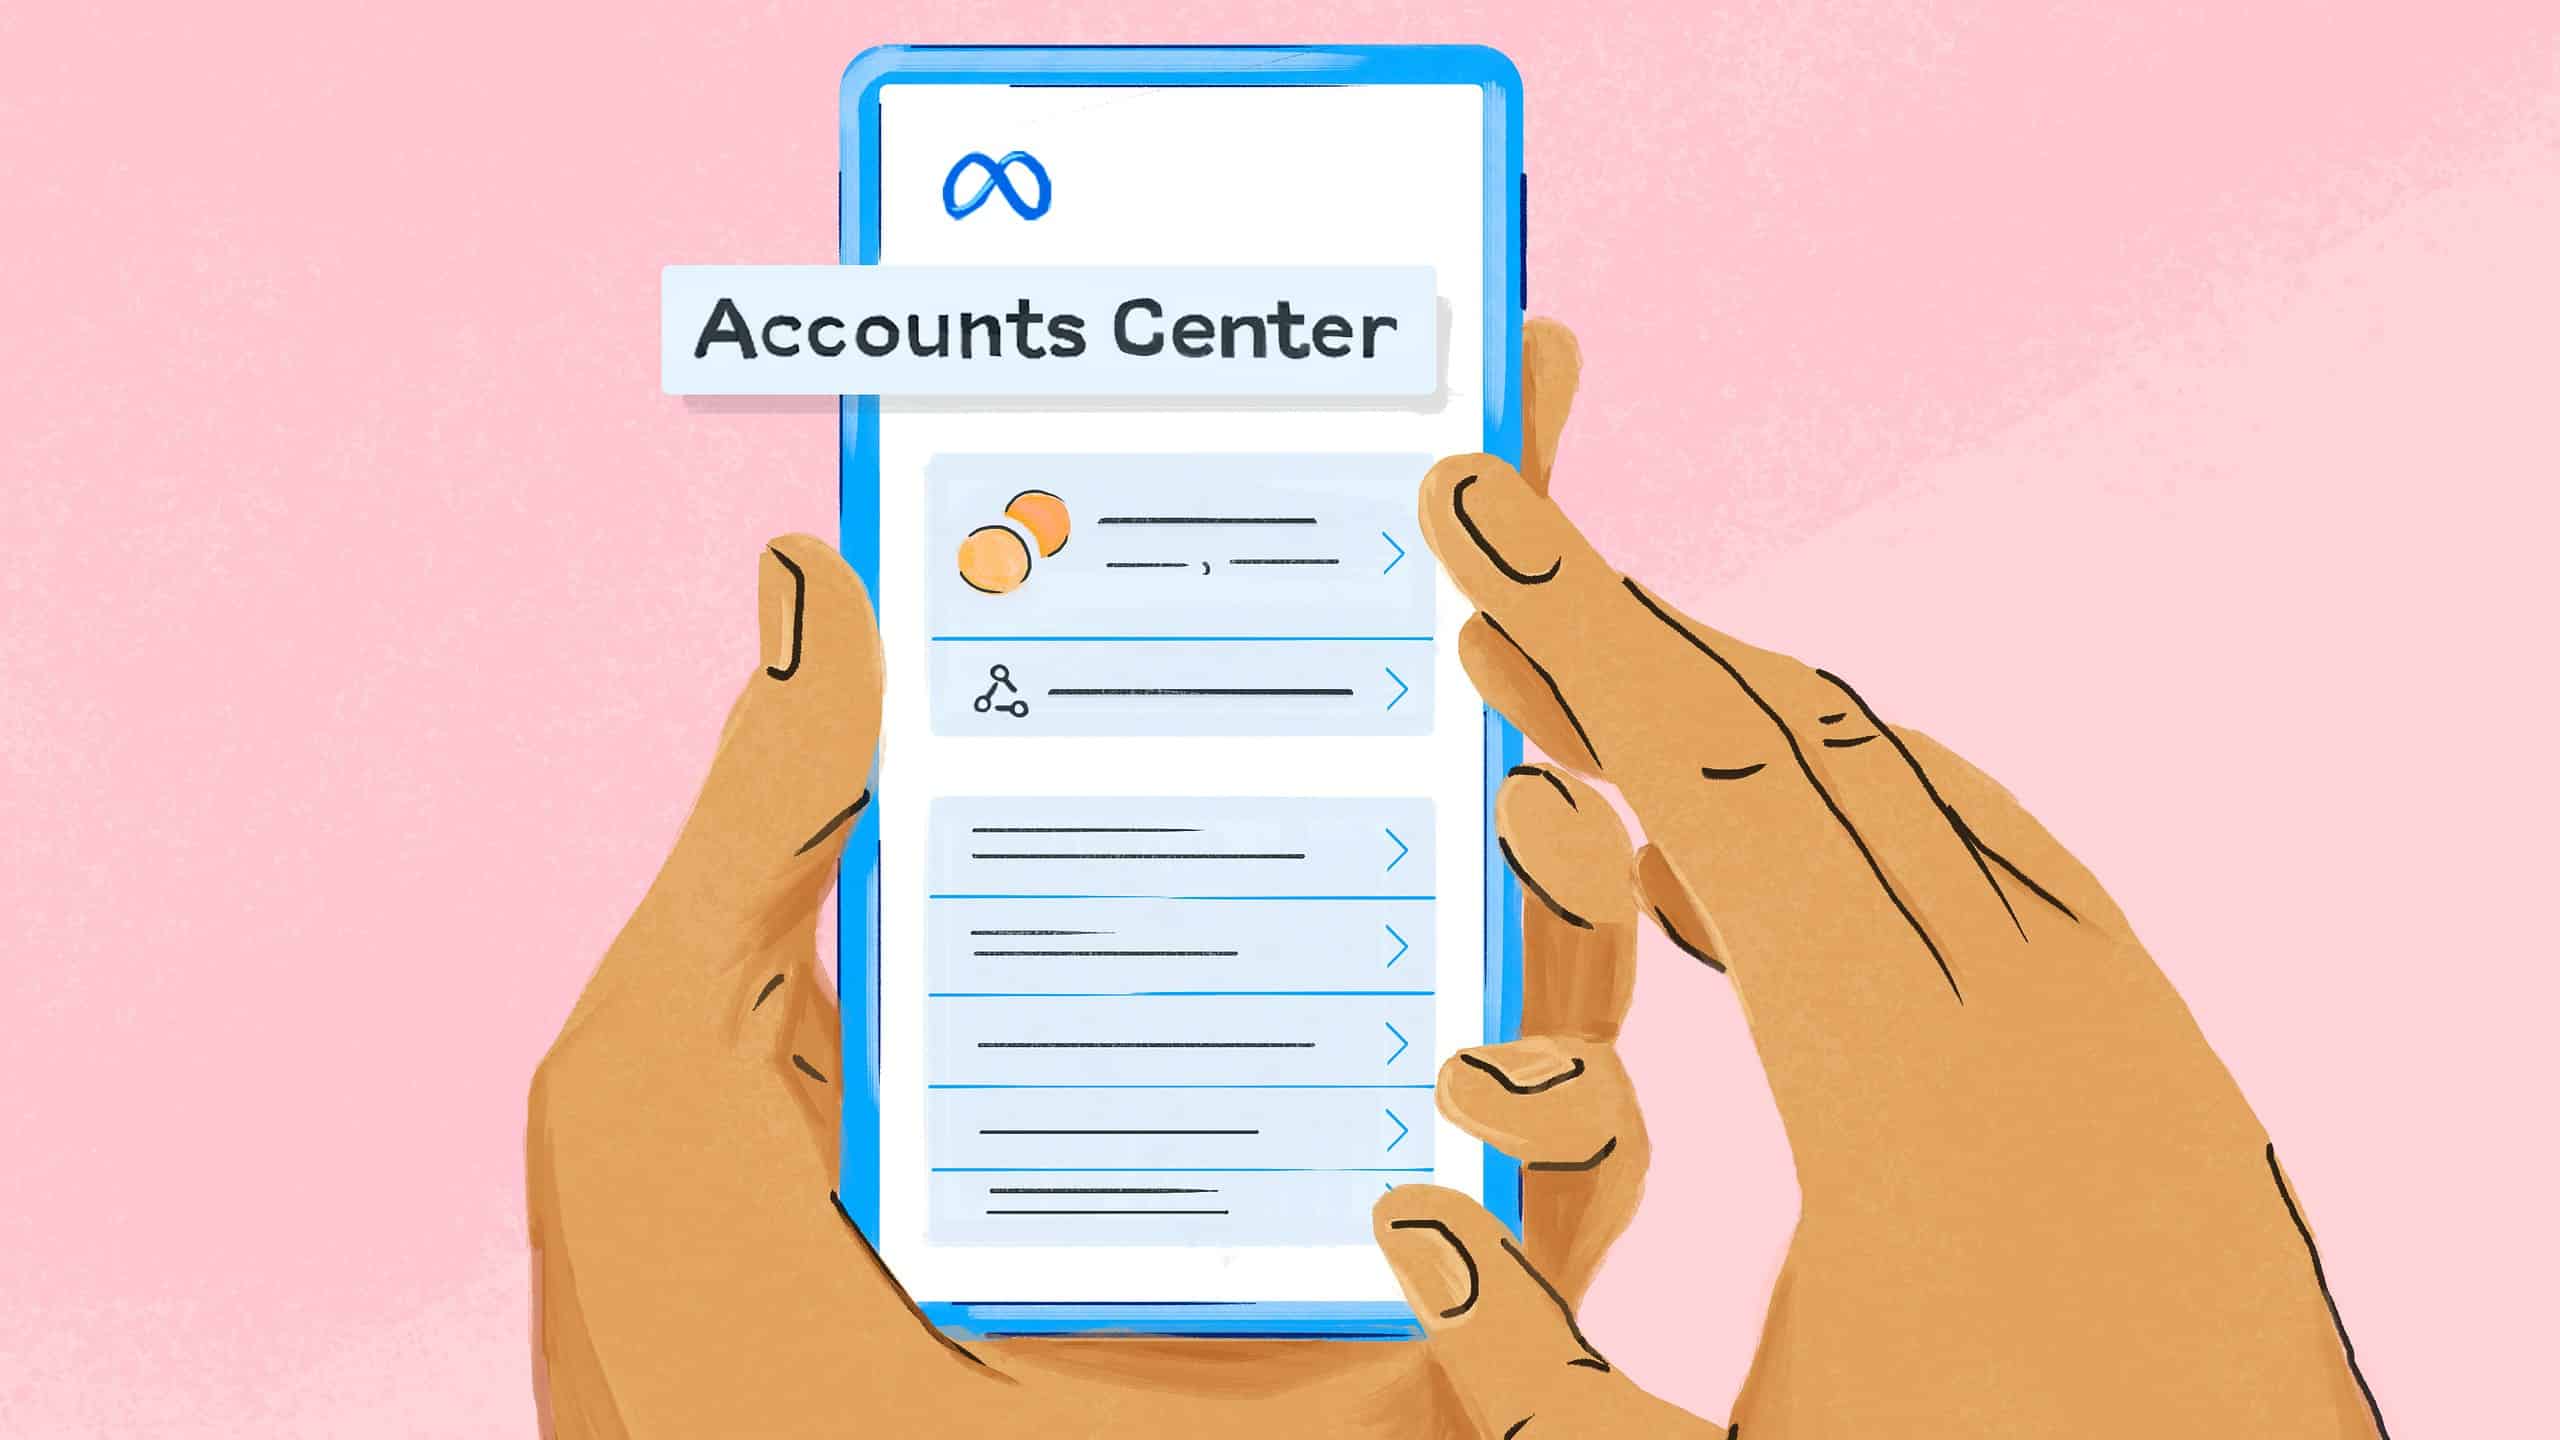 Meta accounts center